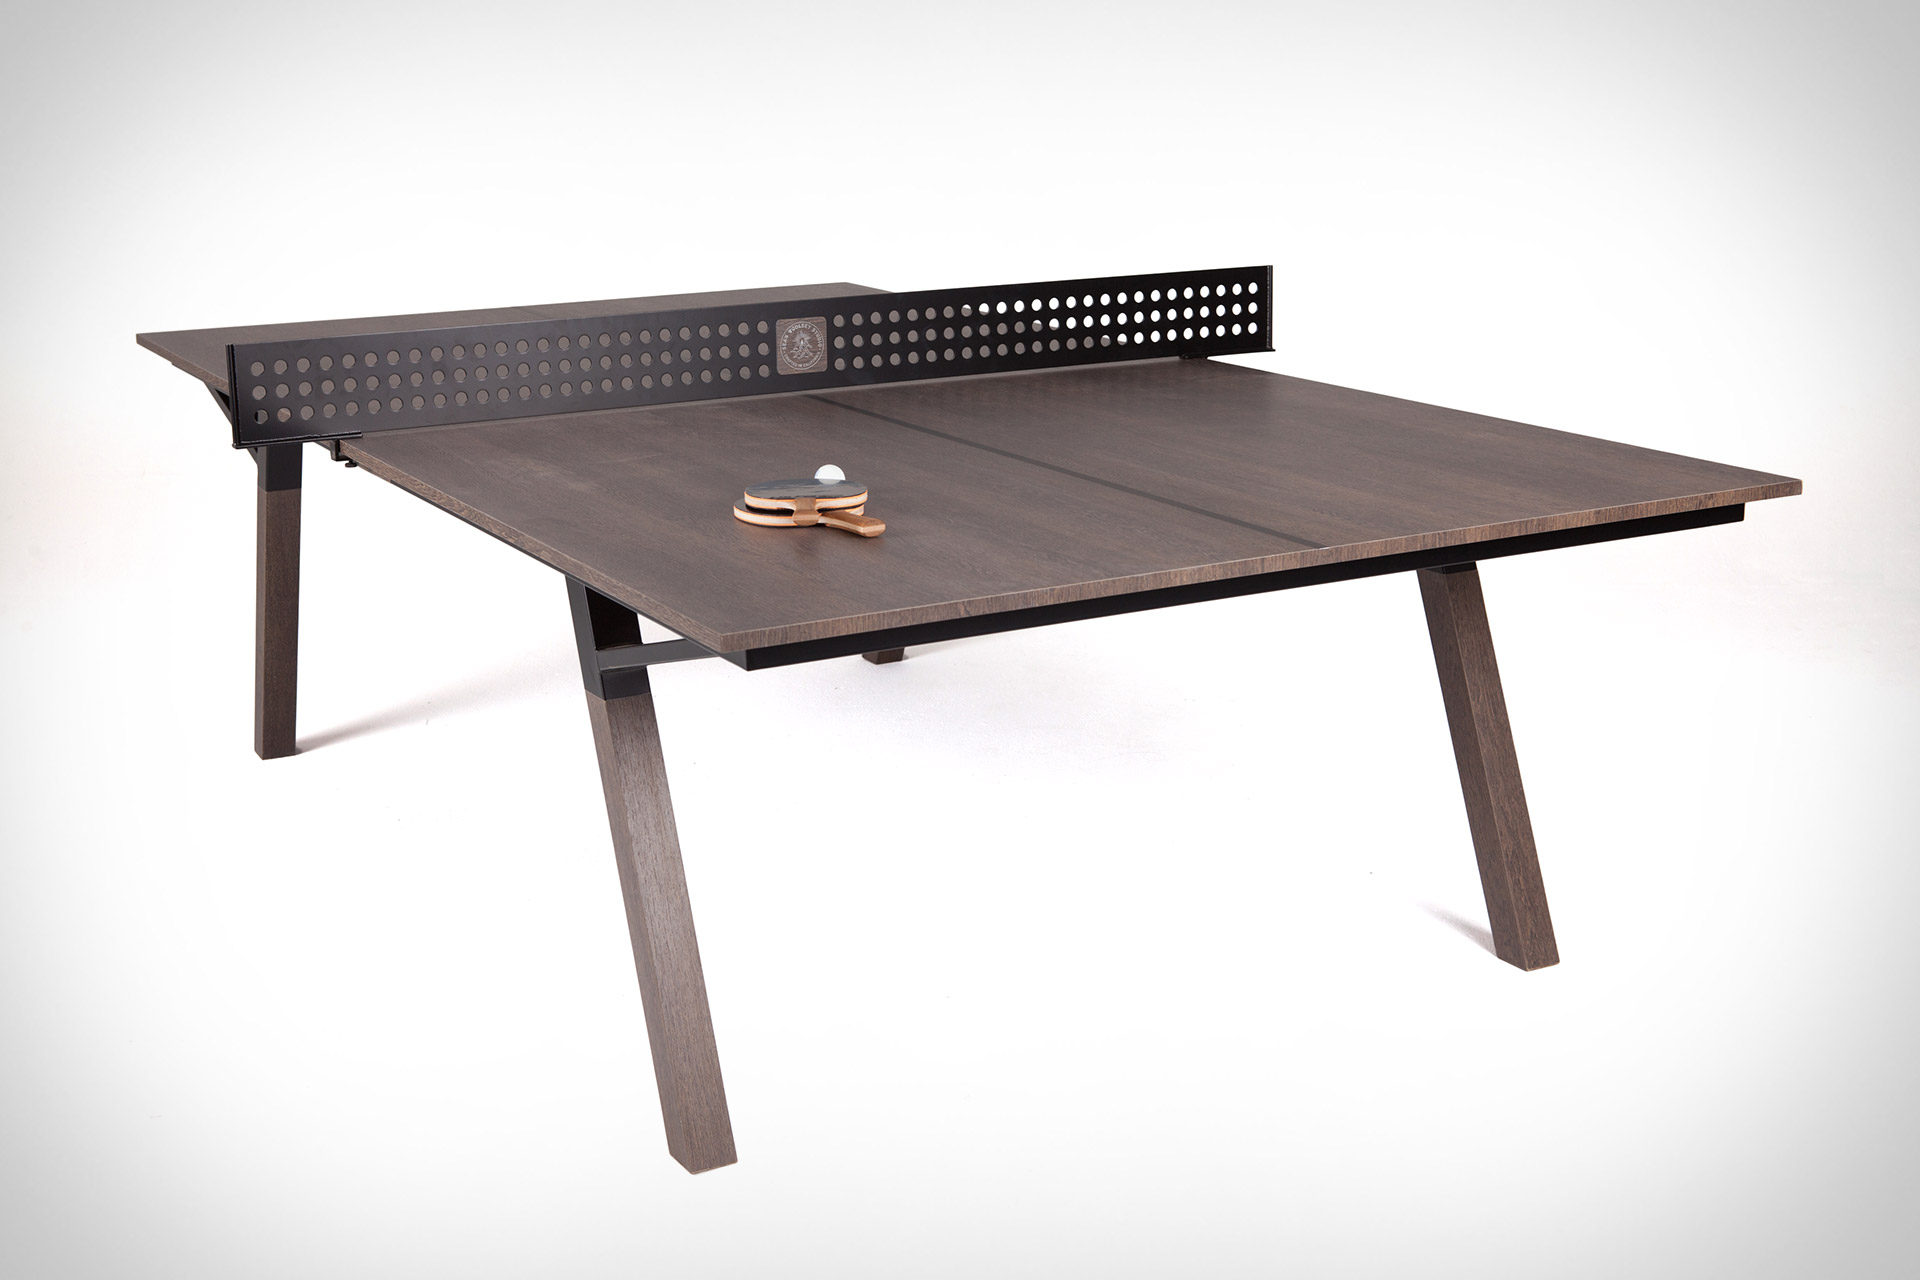 adidas table tennis table